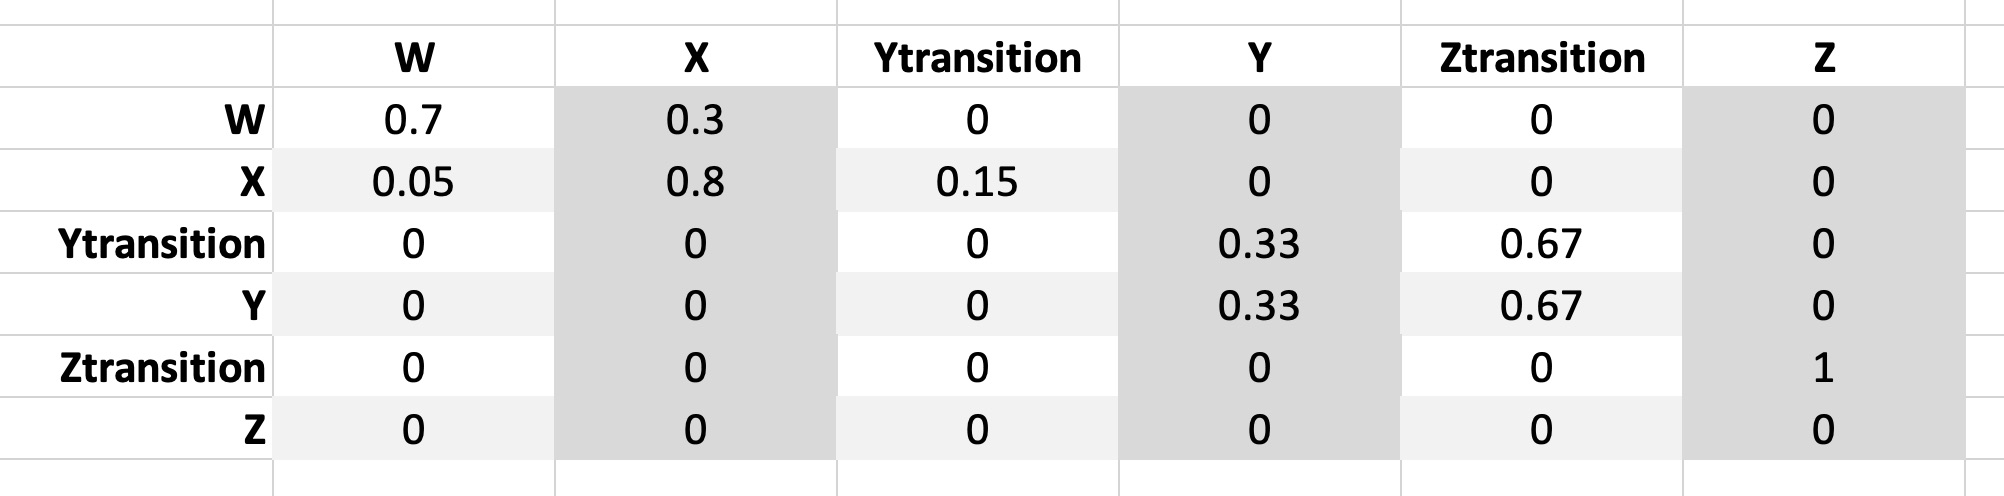 A screenshot of a transition matrix built in Excel